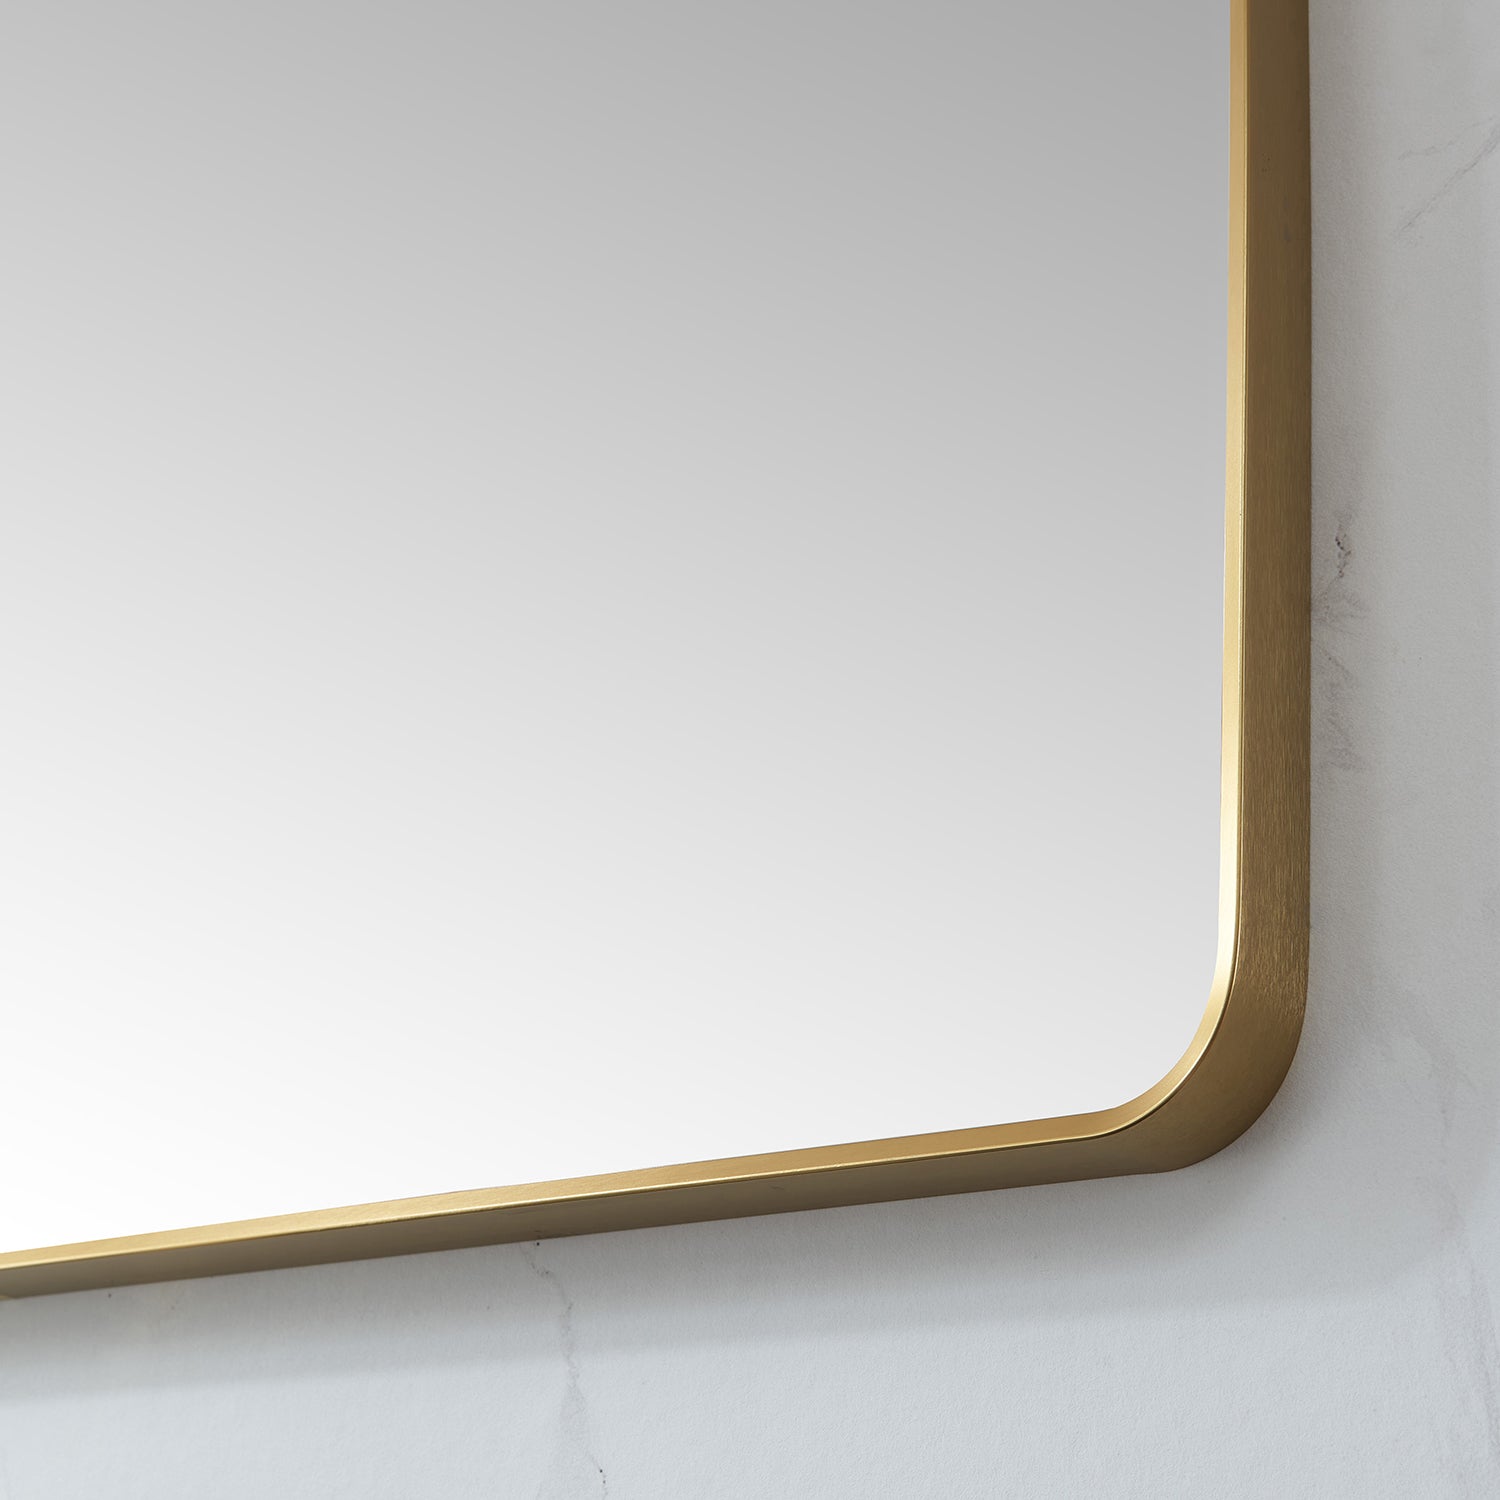 Mutriku 48 in. W x 32 in. H Rectangle Metal Wall Mirror in Brushed Gold